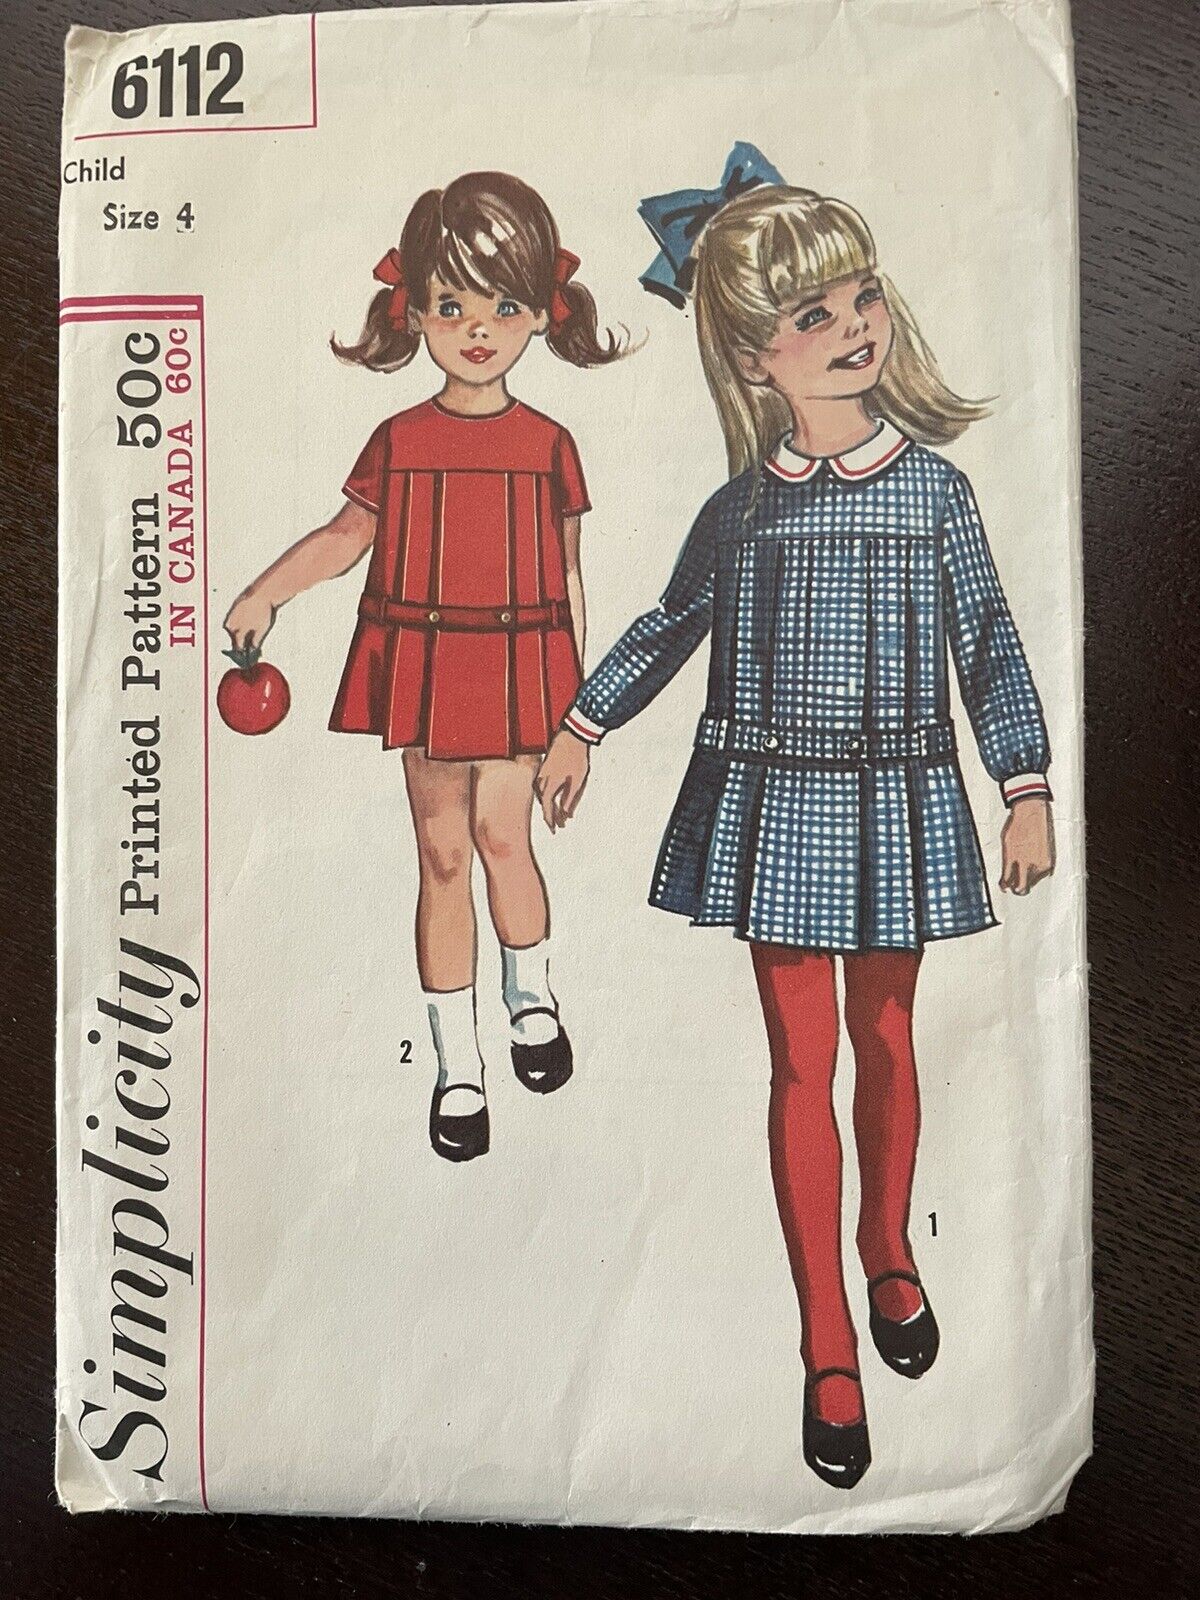 Vintage Simplicity Sewing Patterns 6112 Girls Dress Size 4 Child Cut